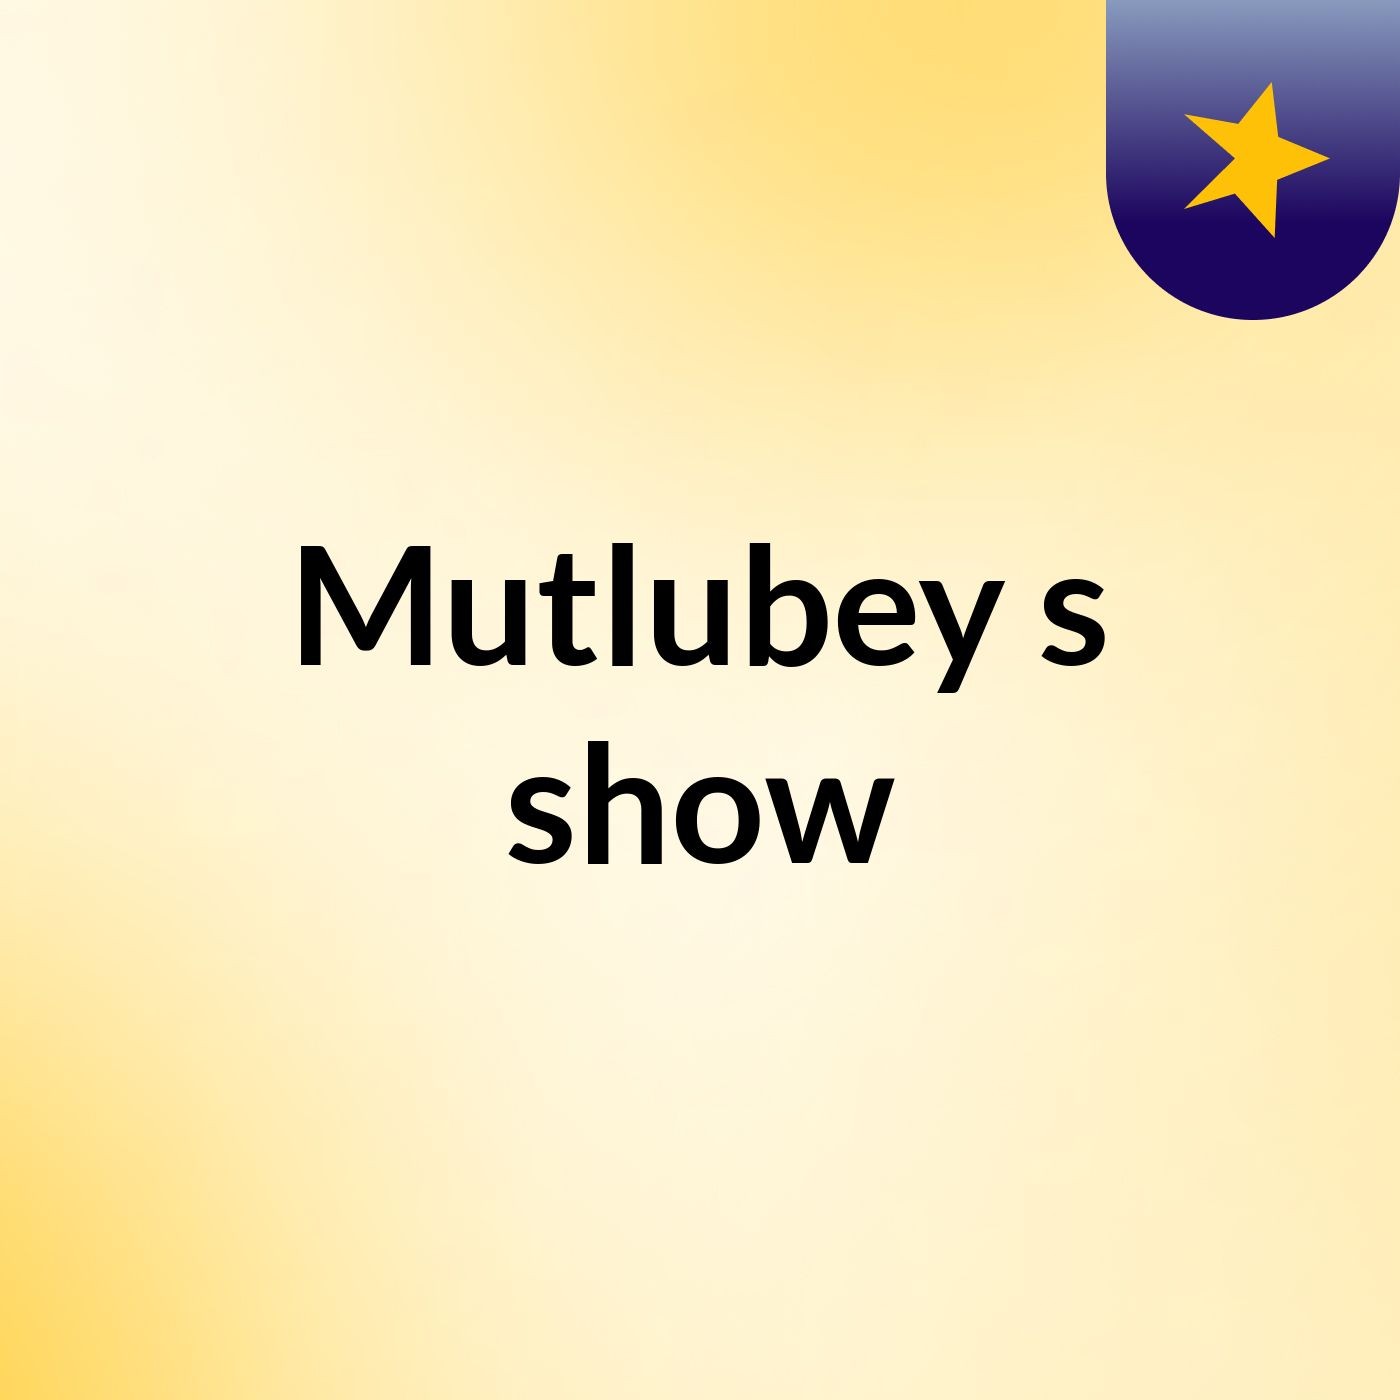 Mutlubey's show